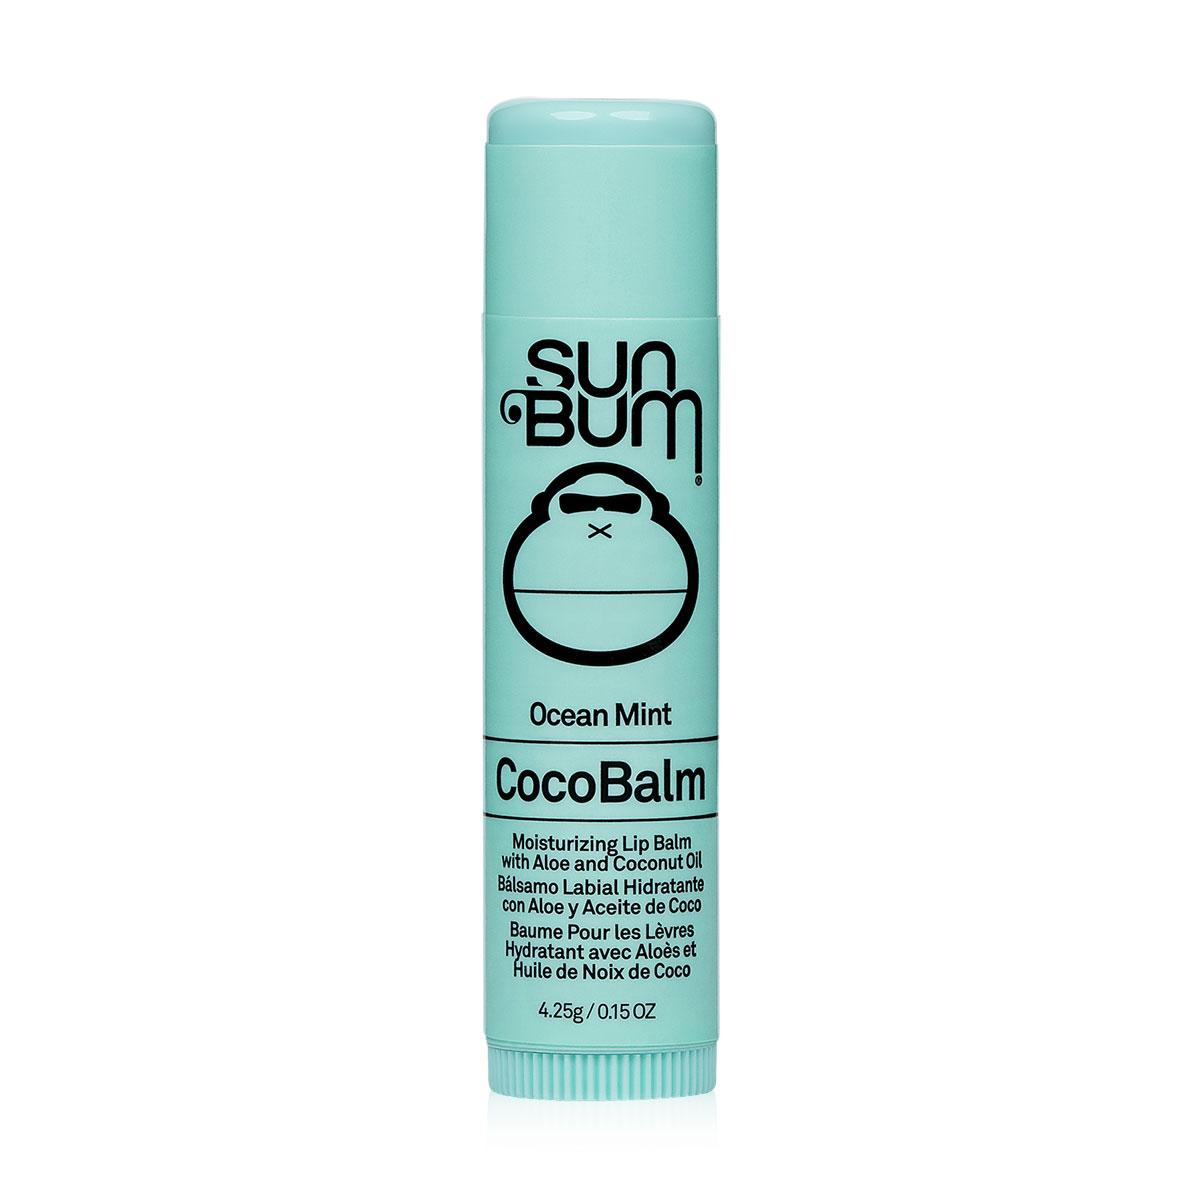 Sun Bum CocoBalm Moisturizing Lip Balm – Ocean Mint 4.25g